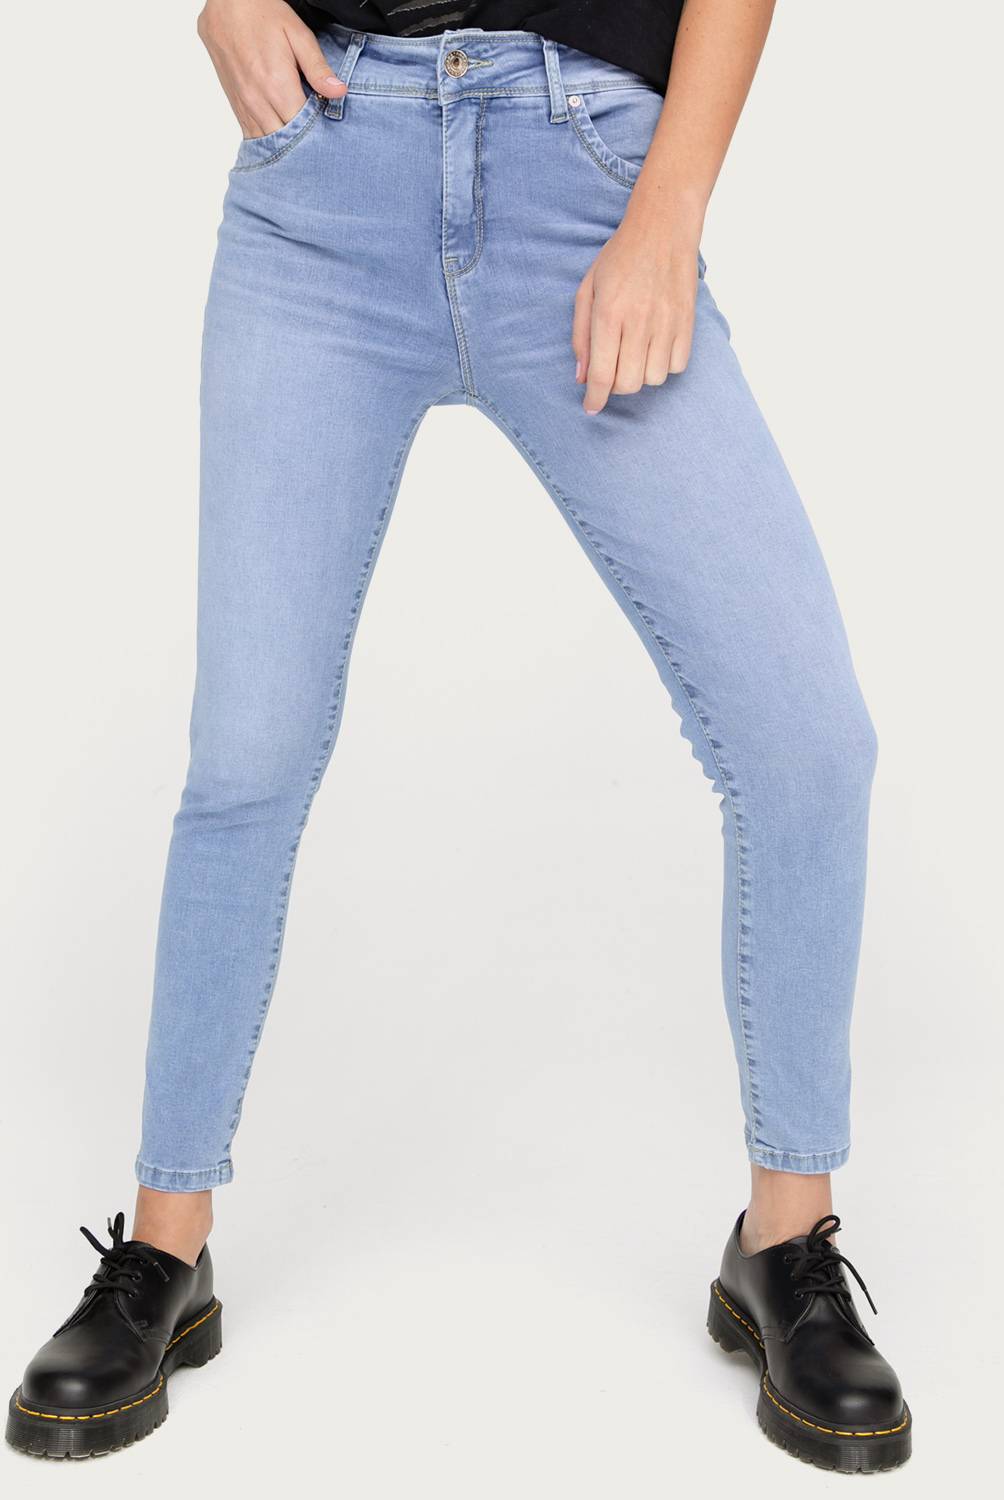 Americanino - Americanino Jeans Denim Wide Leg Tiro Alto Mujer